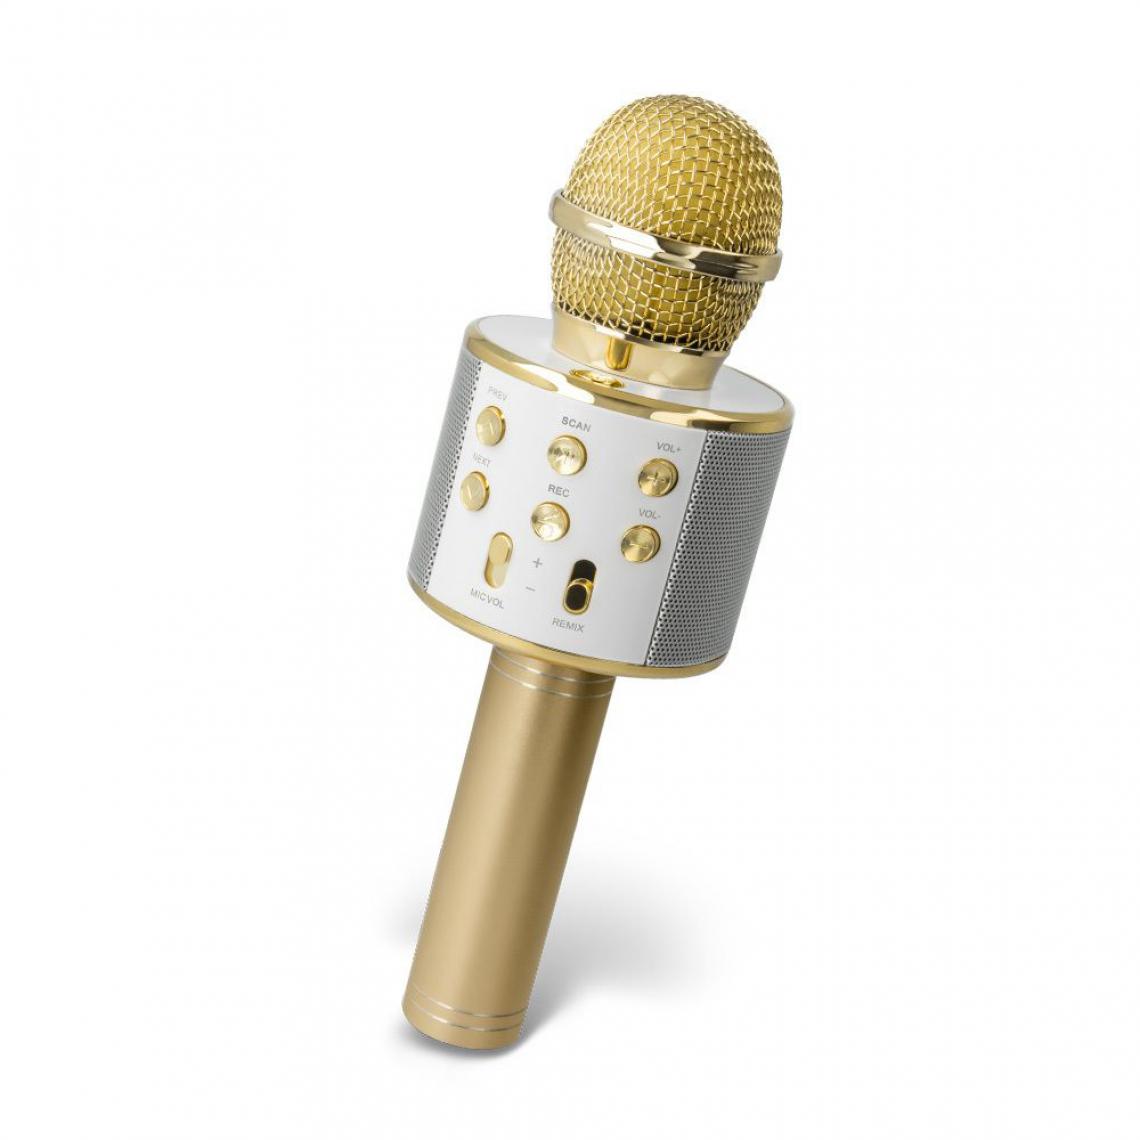 Ozzzo - Microphone Karaoke bluetooth haut parleur ozzzo Gold Or pour SAMSUNG G870 Galaxy S5 Active - Autres accessoires smartphone